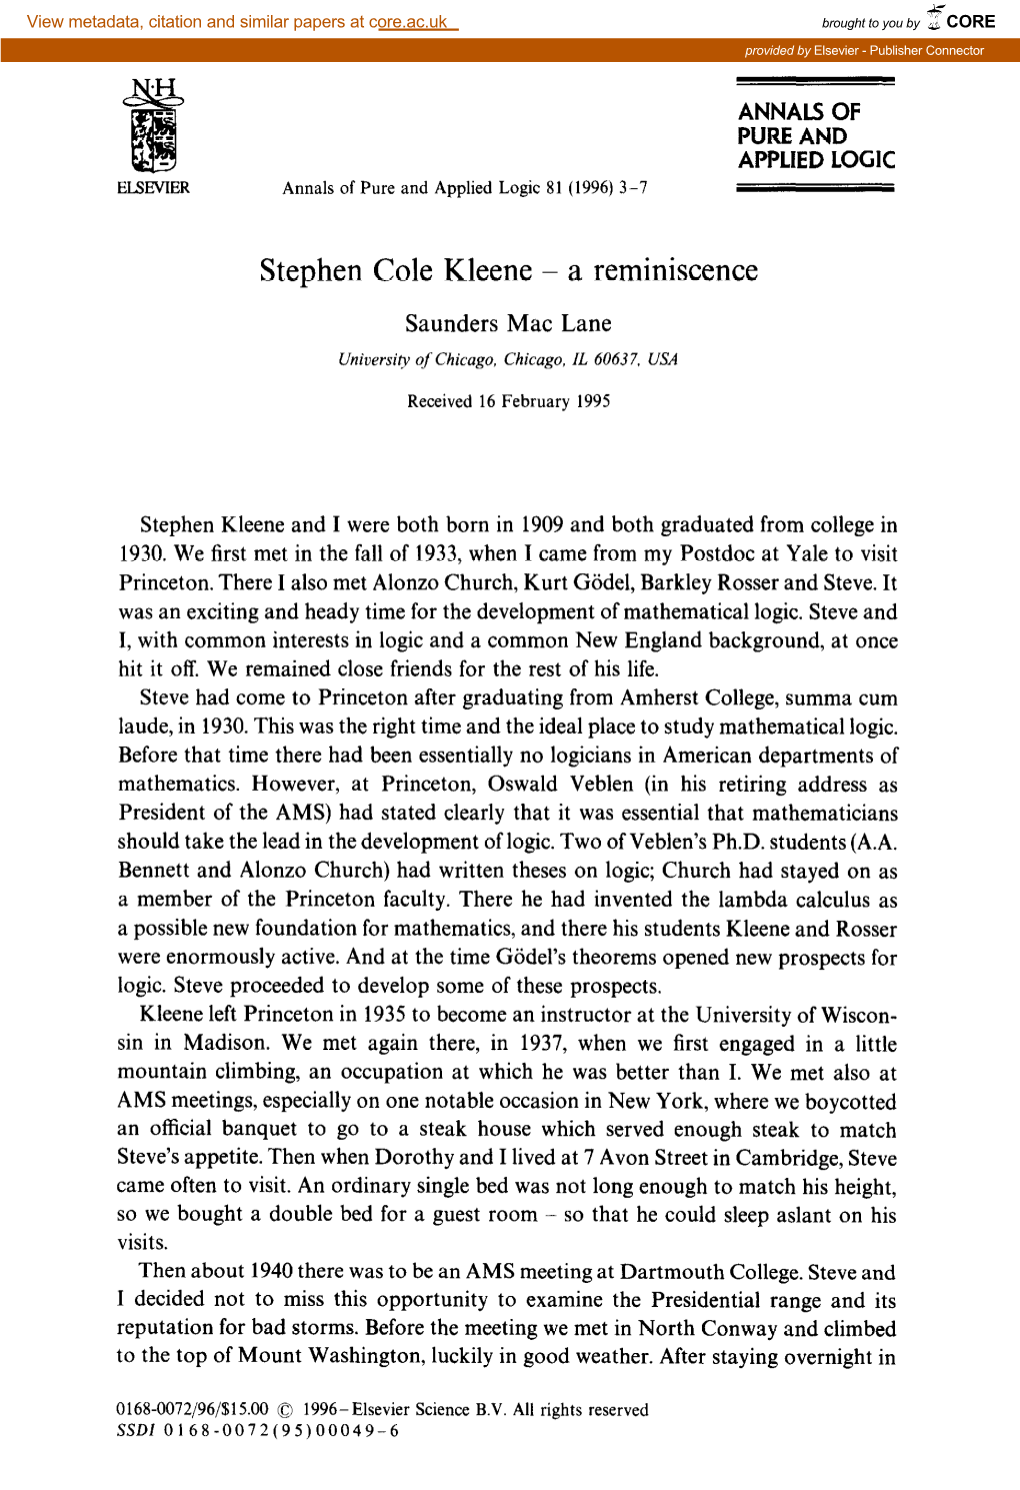 Stephen Cole Kleene - a Reminiscence